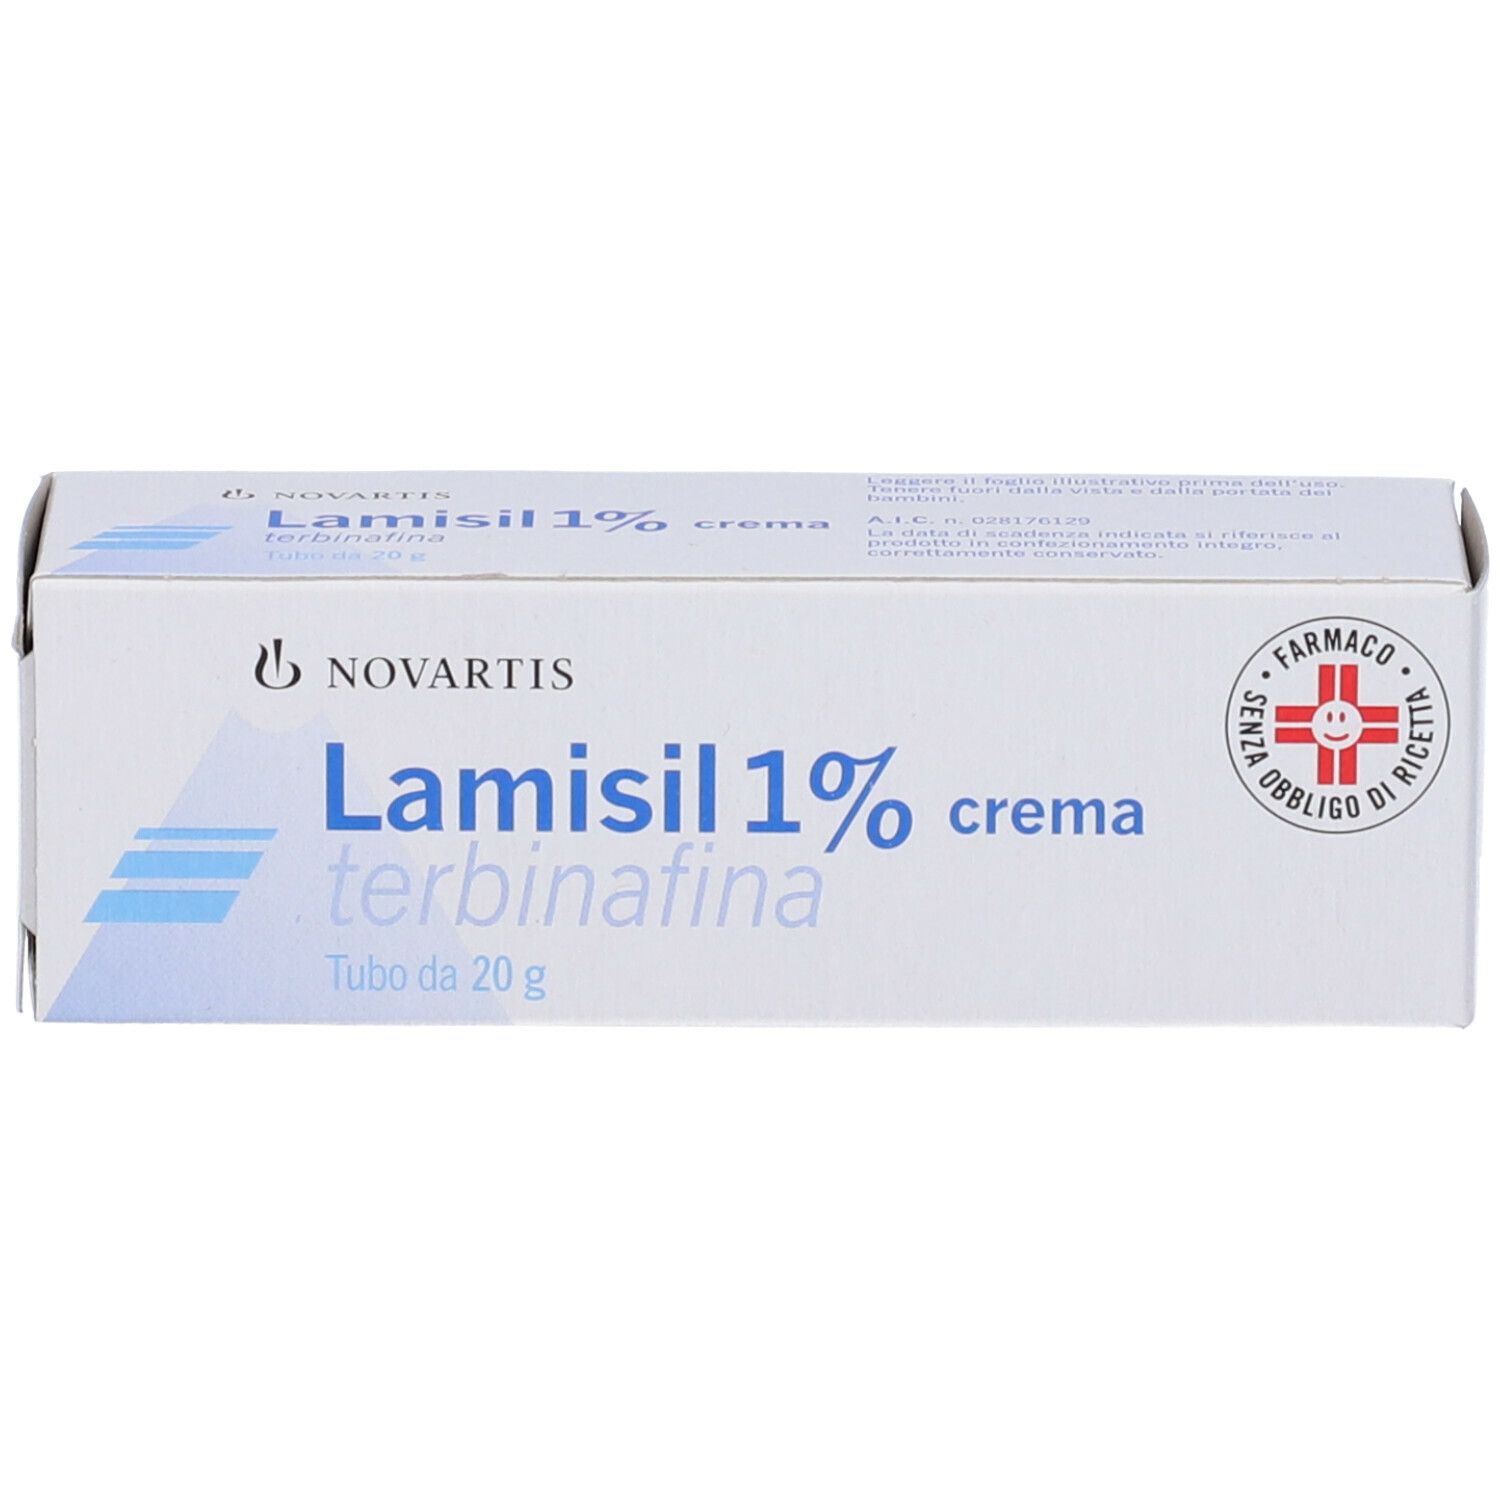 Lamisil 1% crema